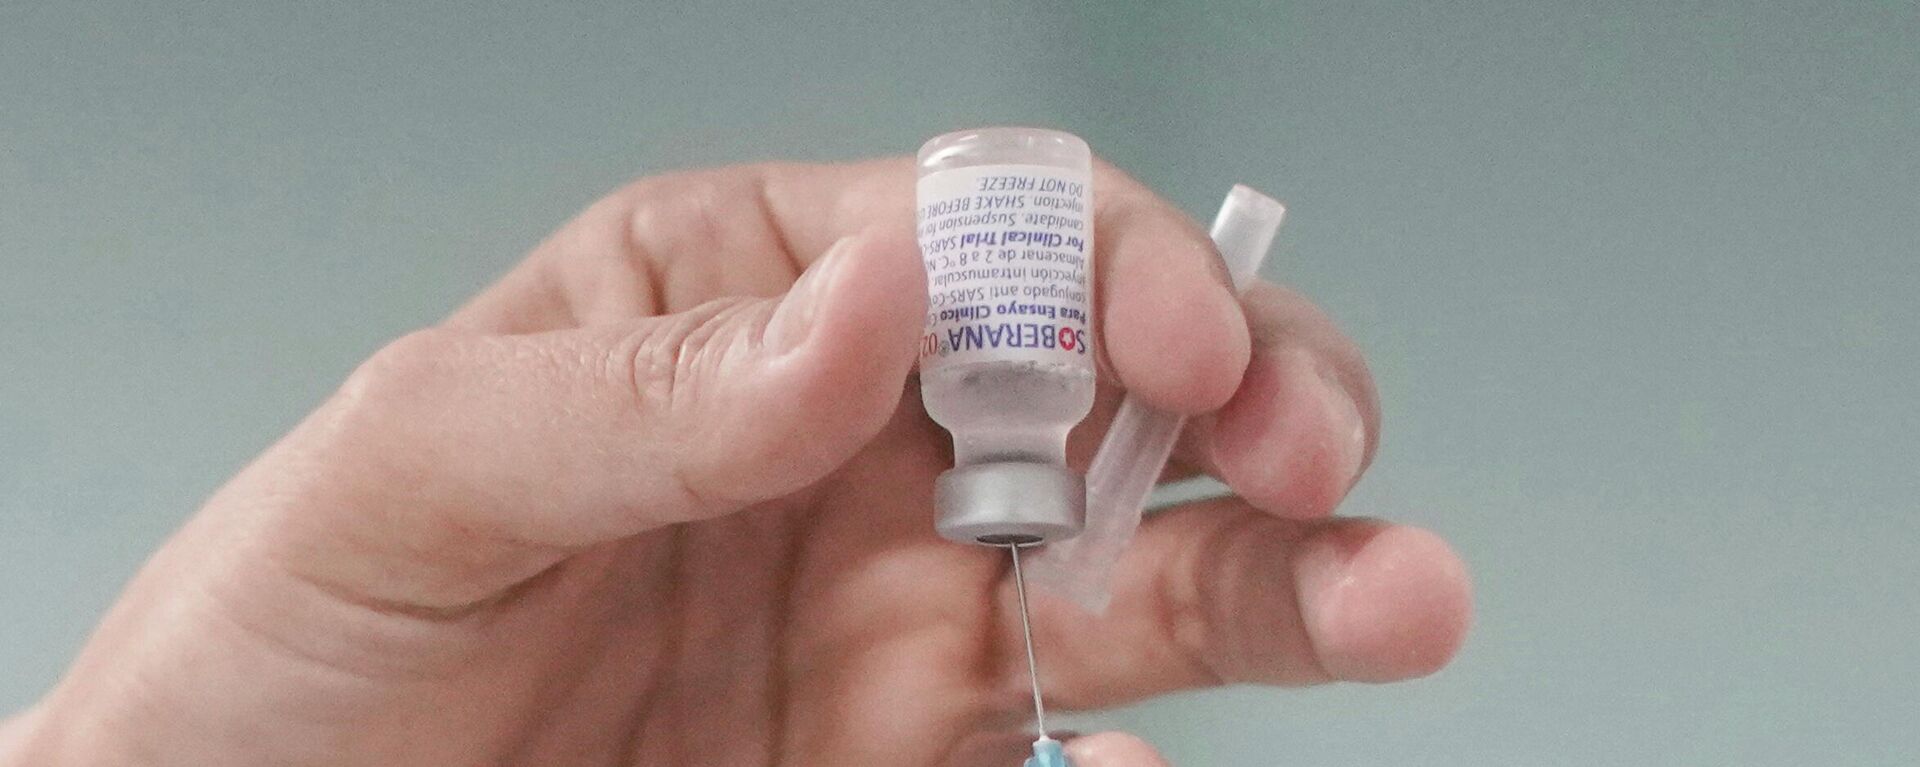 Dosis de la vacuna contra COVID-19 Soberana 2 - Sputnik Mundo, 1920, 30.06.2021